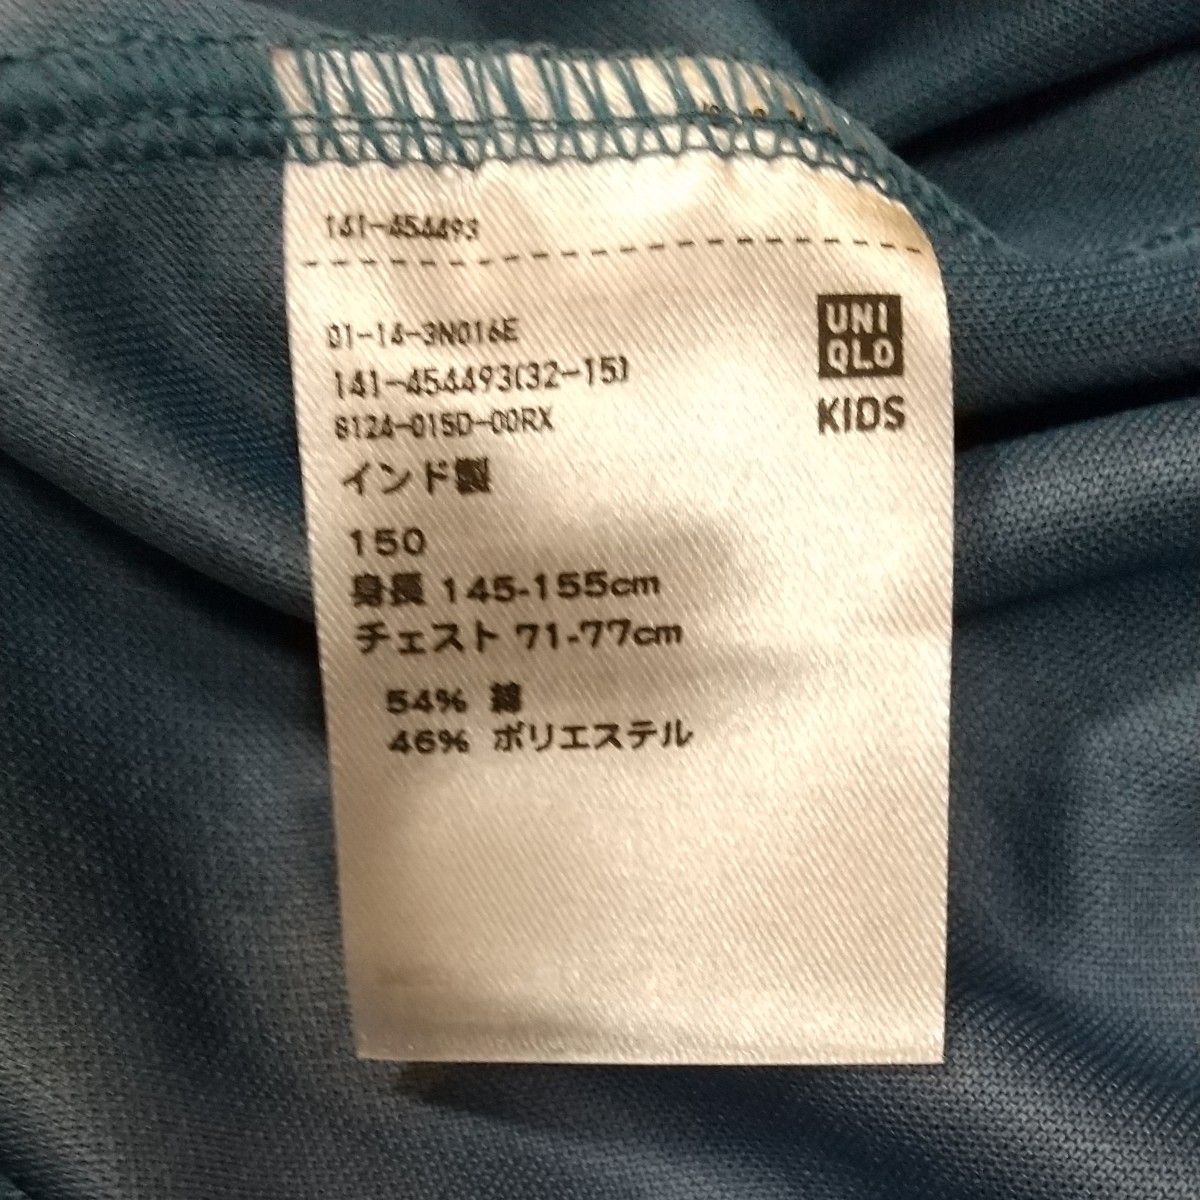  Tシャツ ユニクロ エアリズムコットン 新品未使用